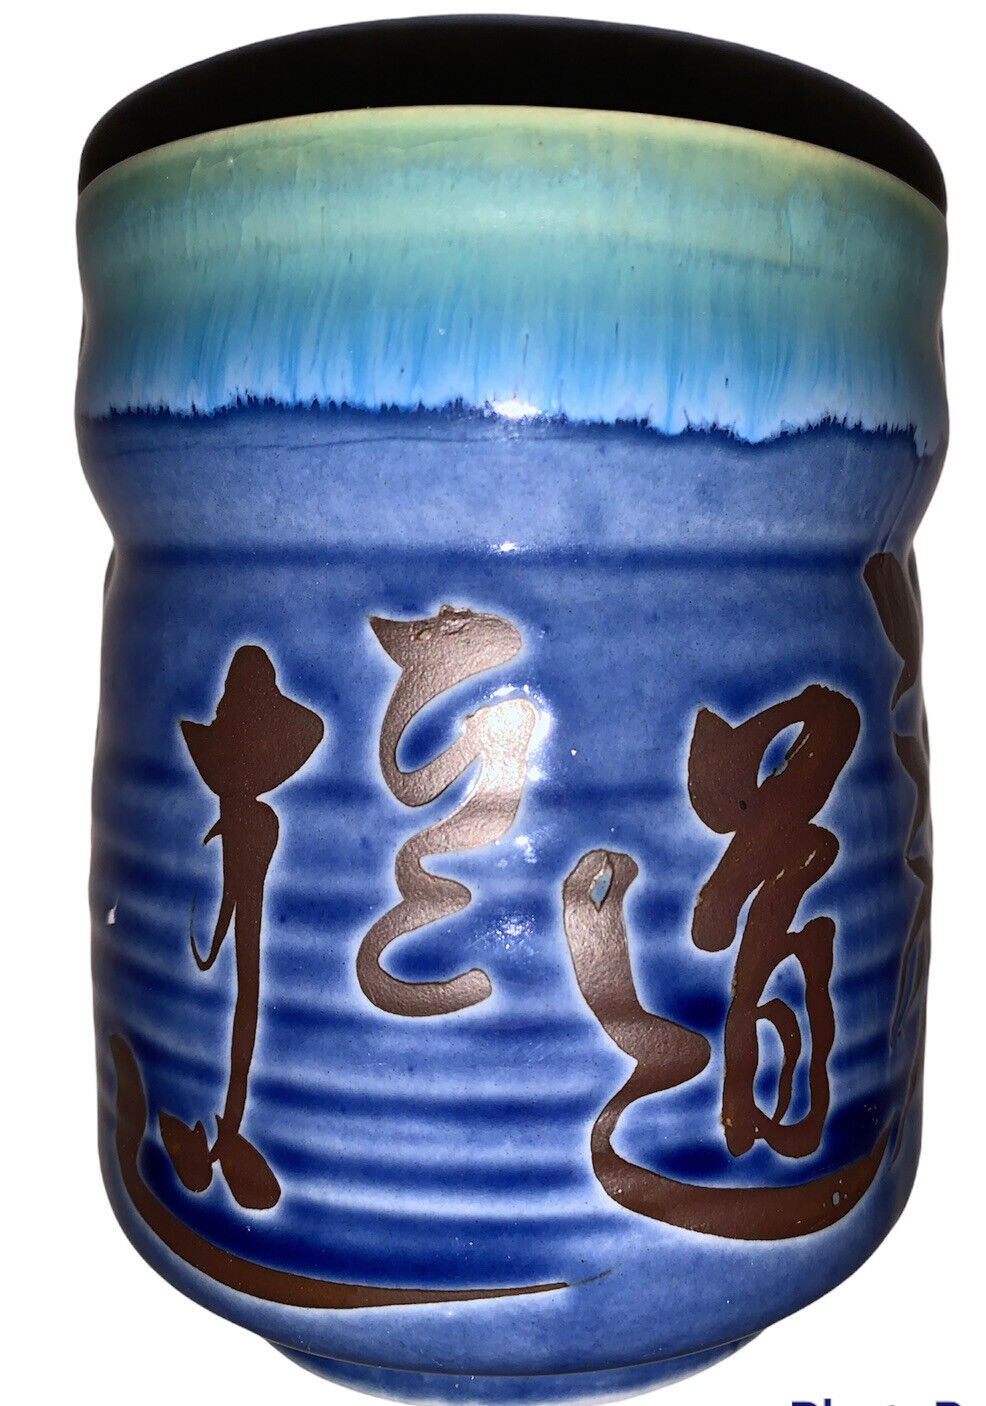 Vintage MCI Japan 4” Glazed Pottery Teacup Multicolor Blue Green Drip Glaze